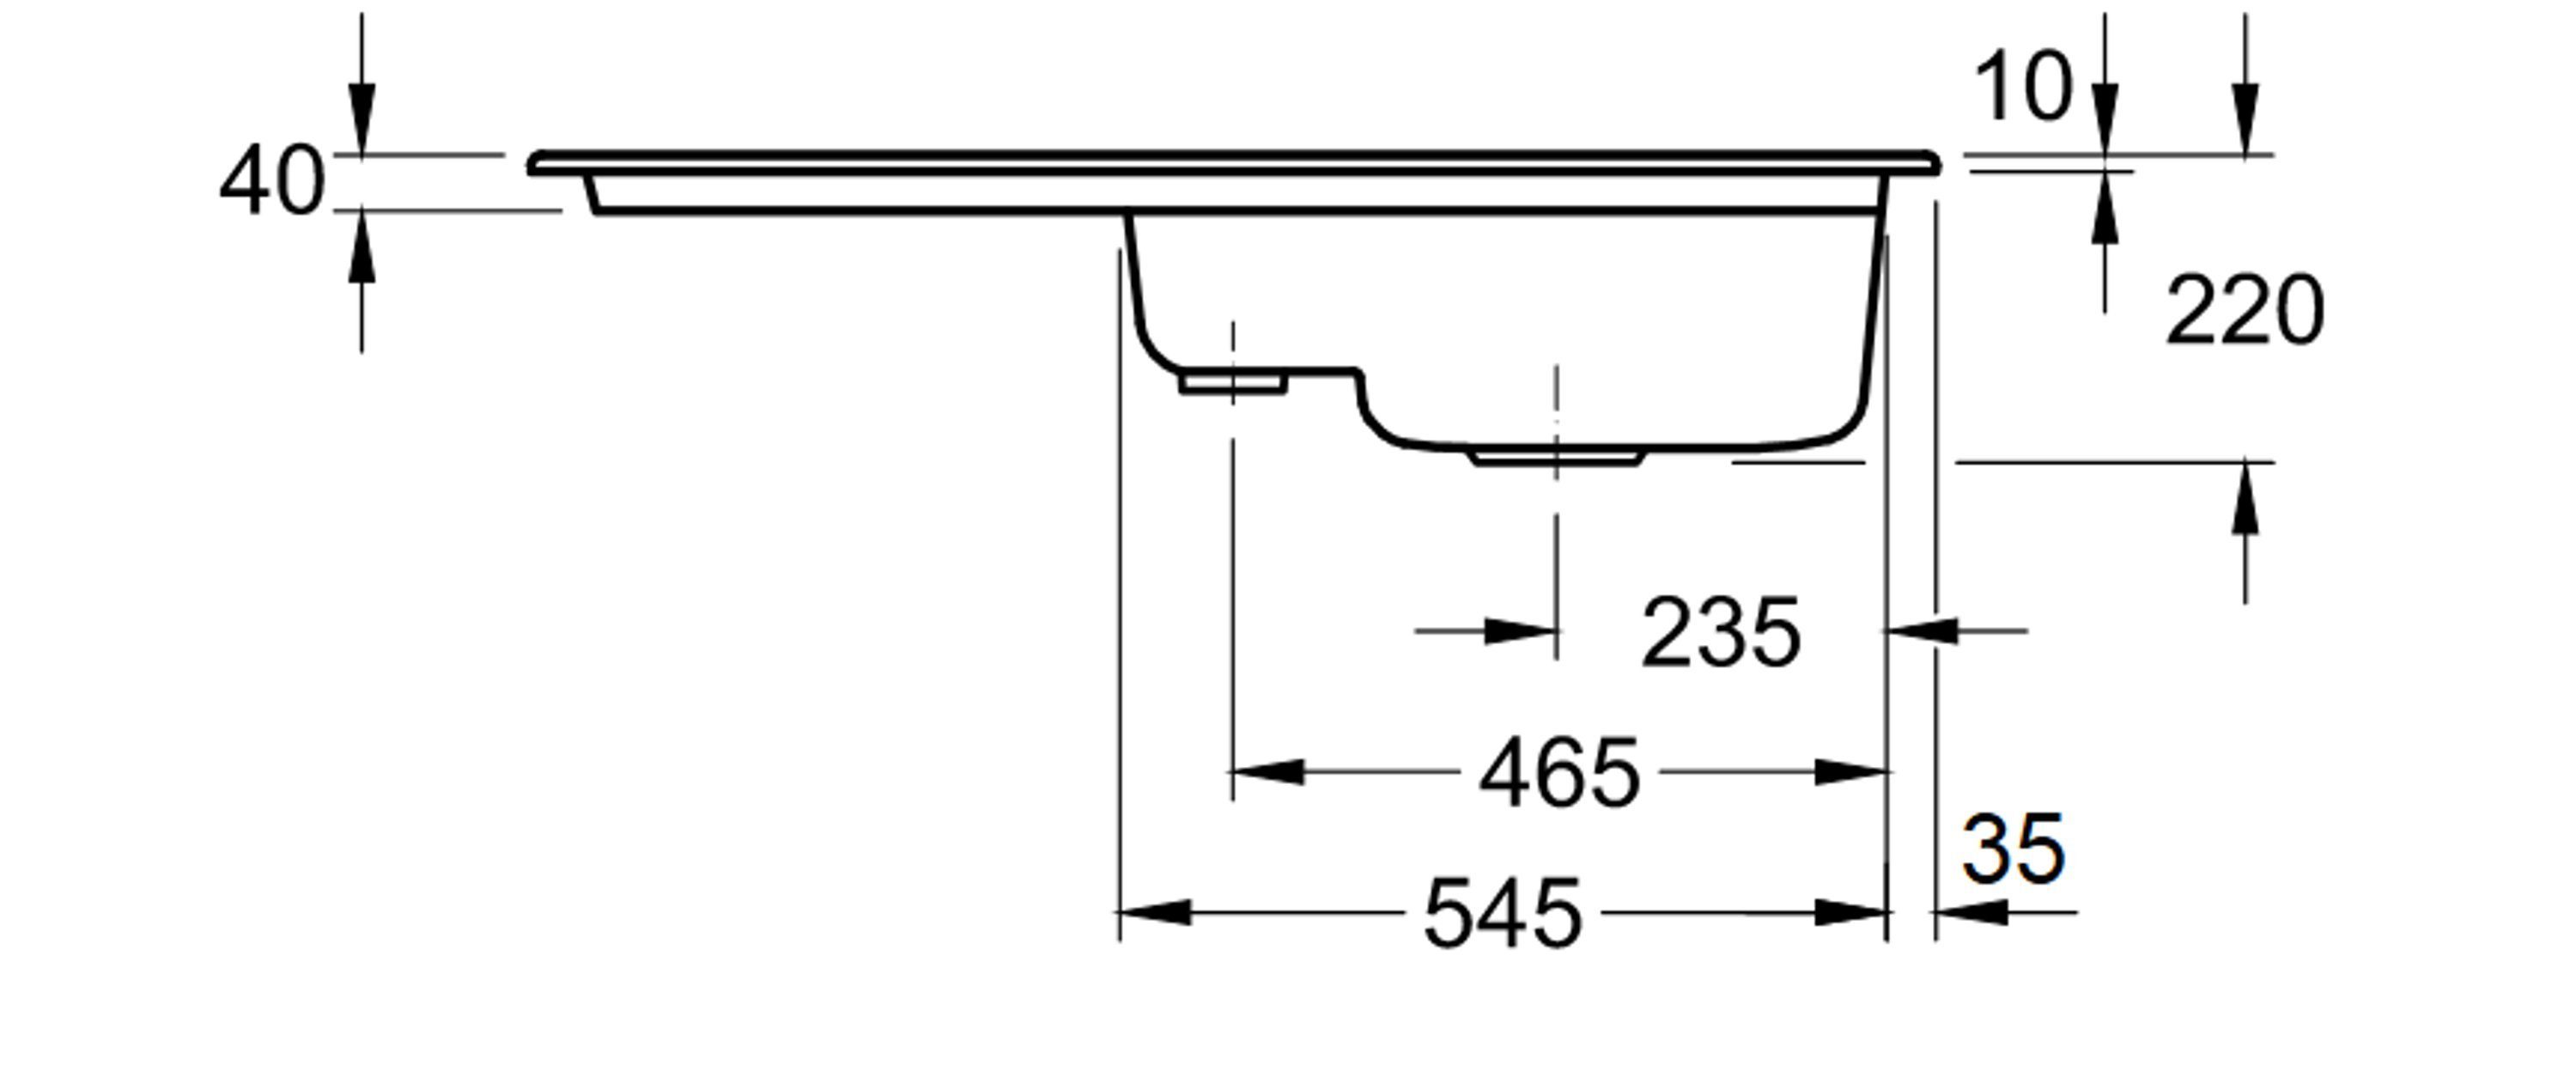 Villeroy & Boch links möglich 6712 cm, Küchenspüle Becken Geschmacksmuster Rechteckig, geschützt, 01 und 100/22 rechts RW